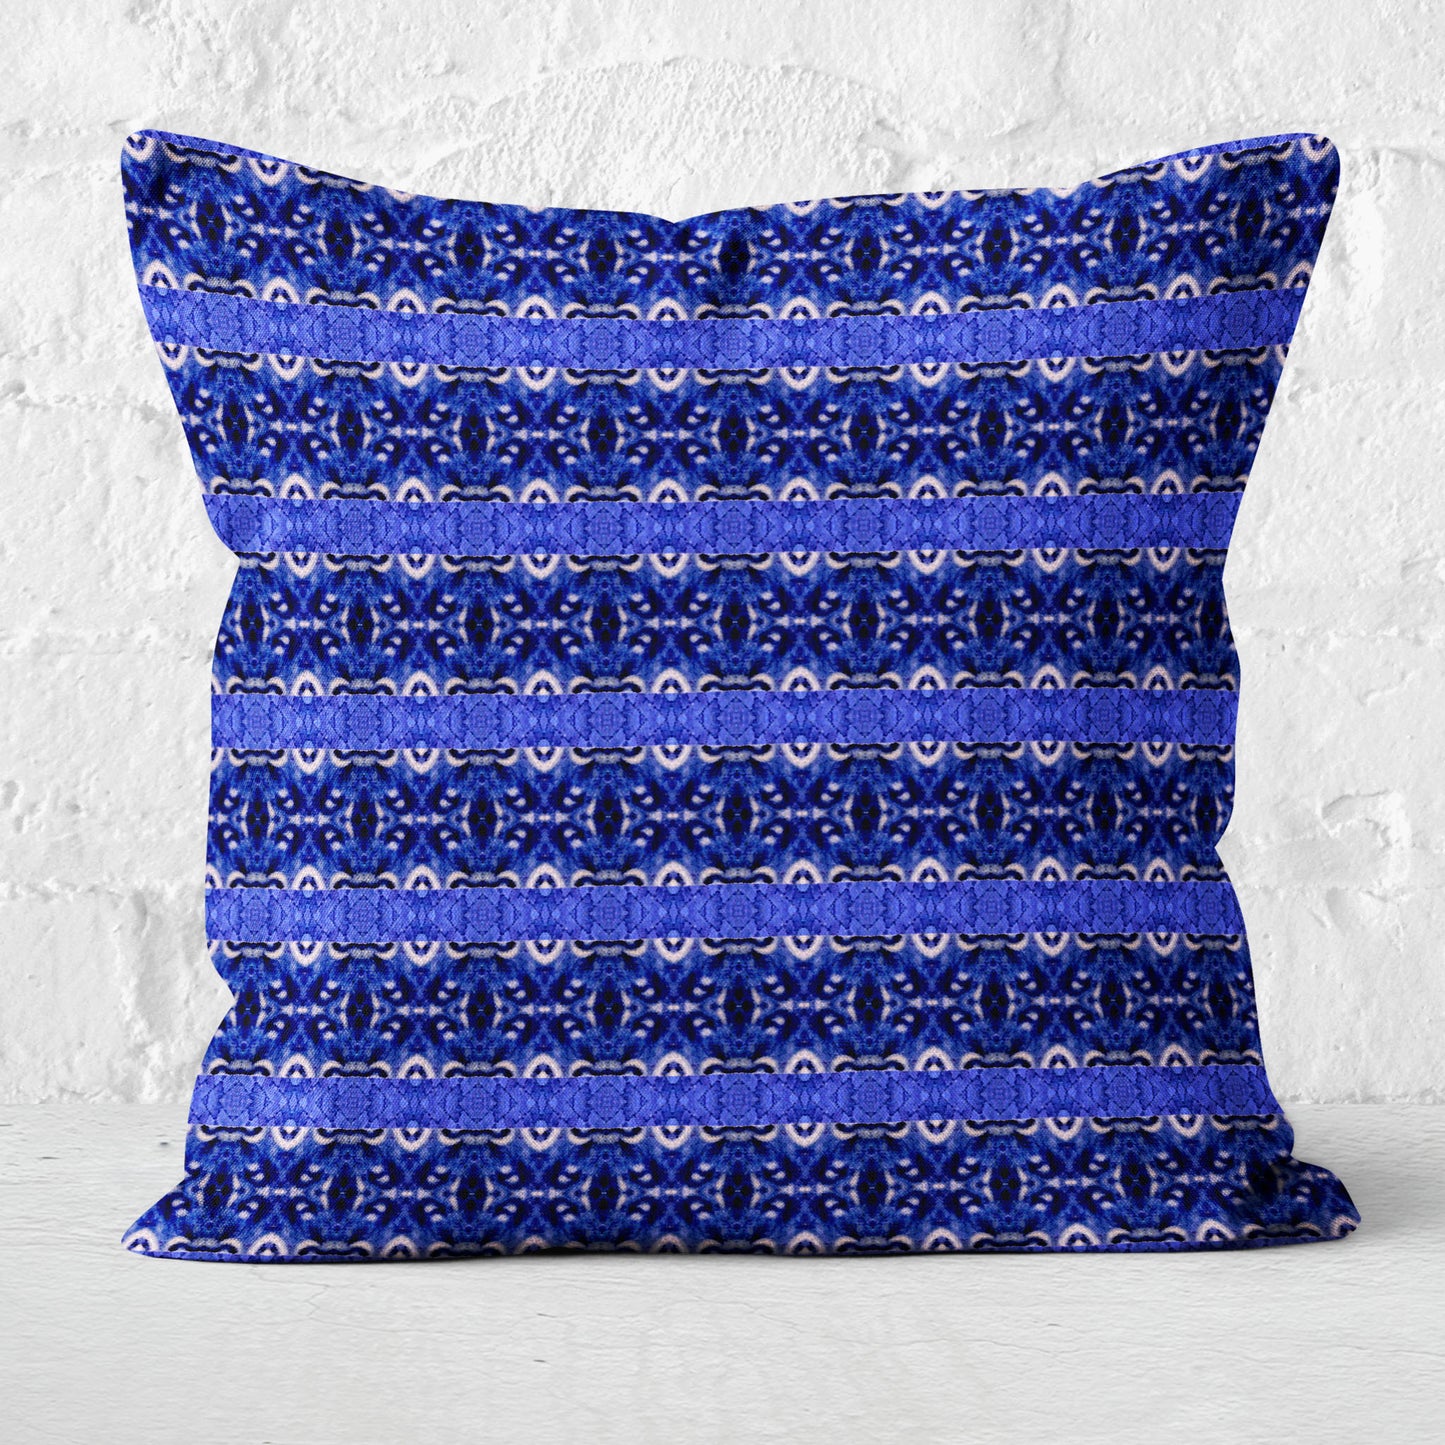 Cobalt blue striped pillow on brick background